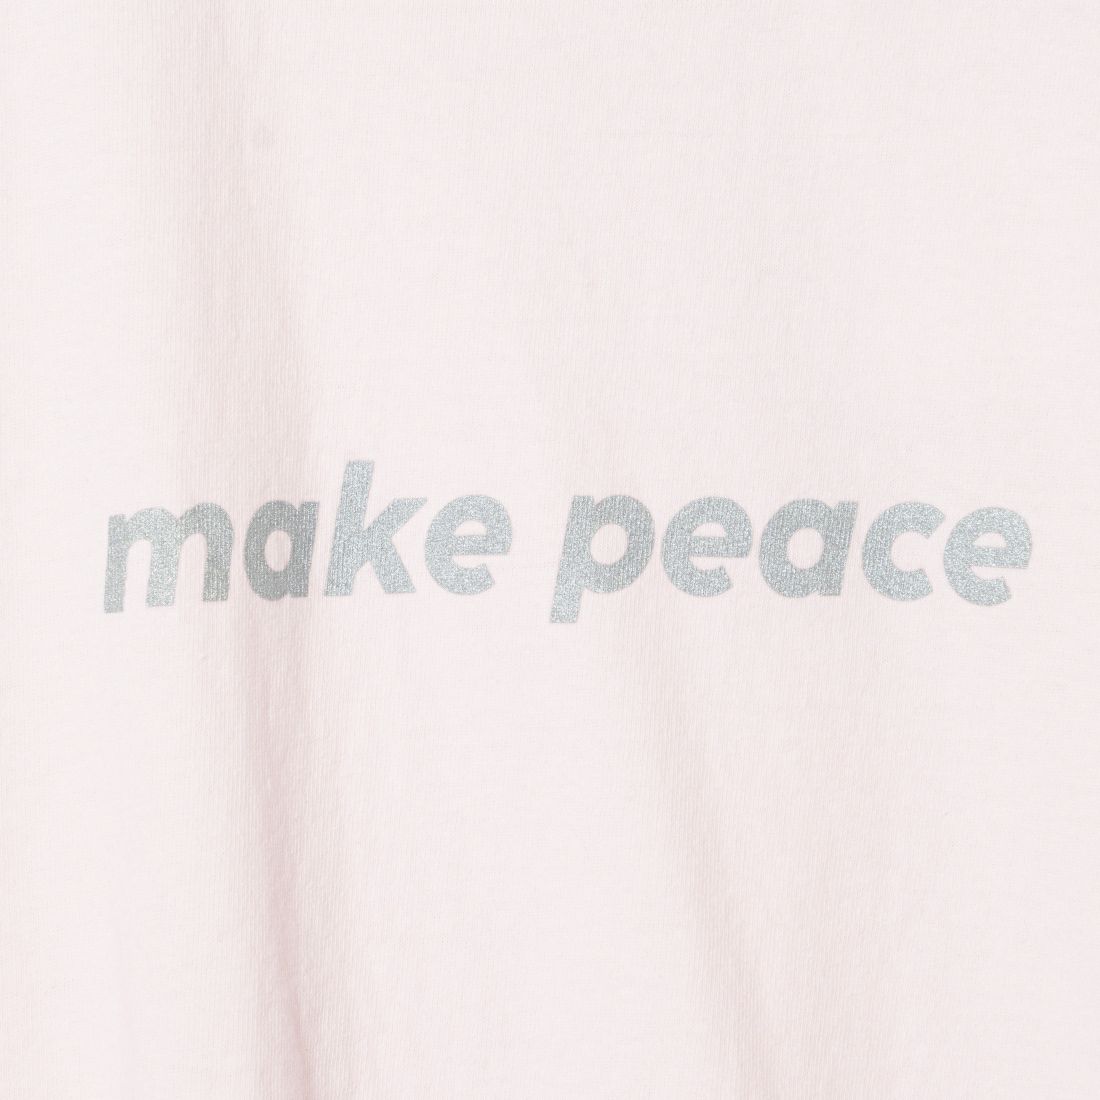 FUNG [ファング] MAKE PEACE カットオフプリントTシャツ [MAKE-PEACE] L.PINK